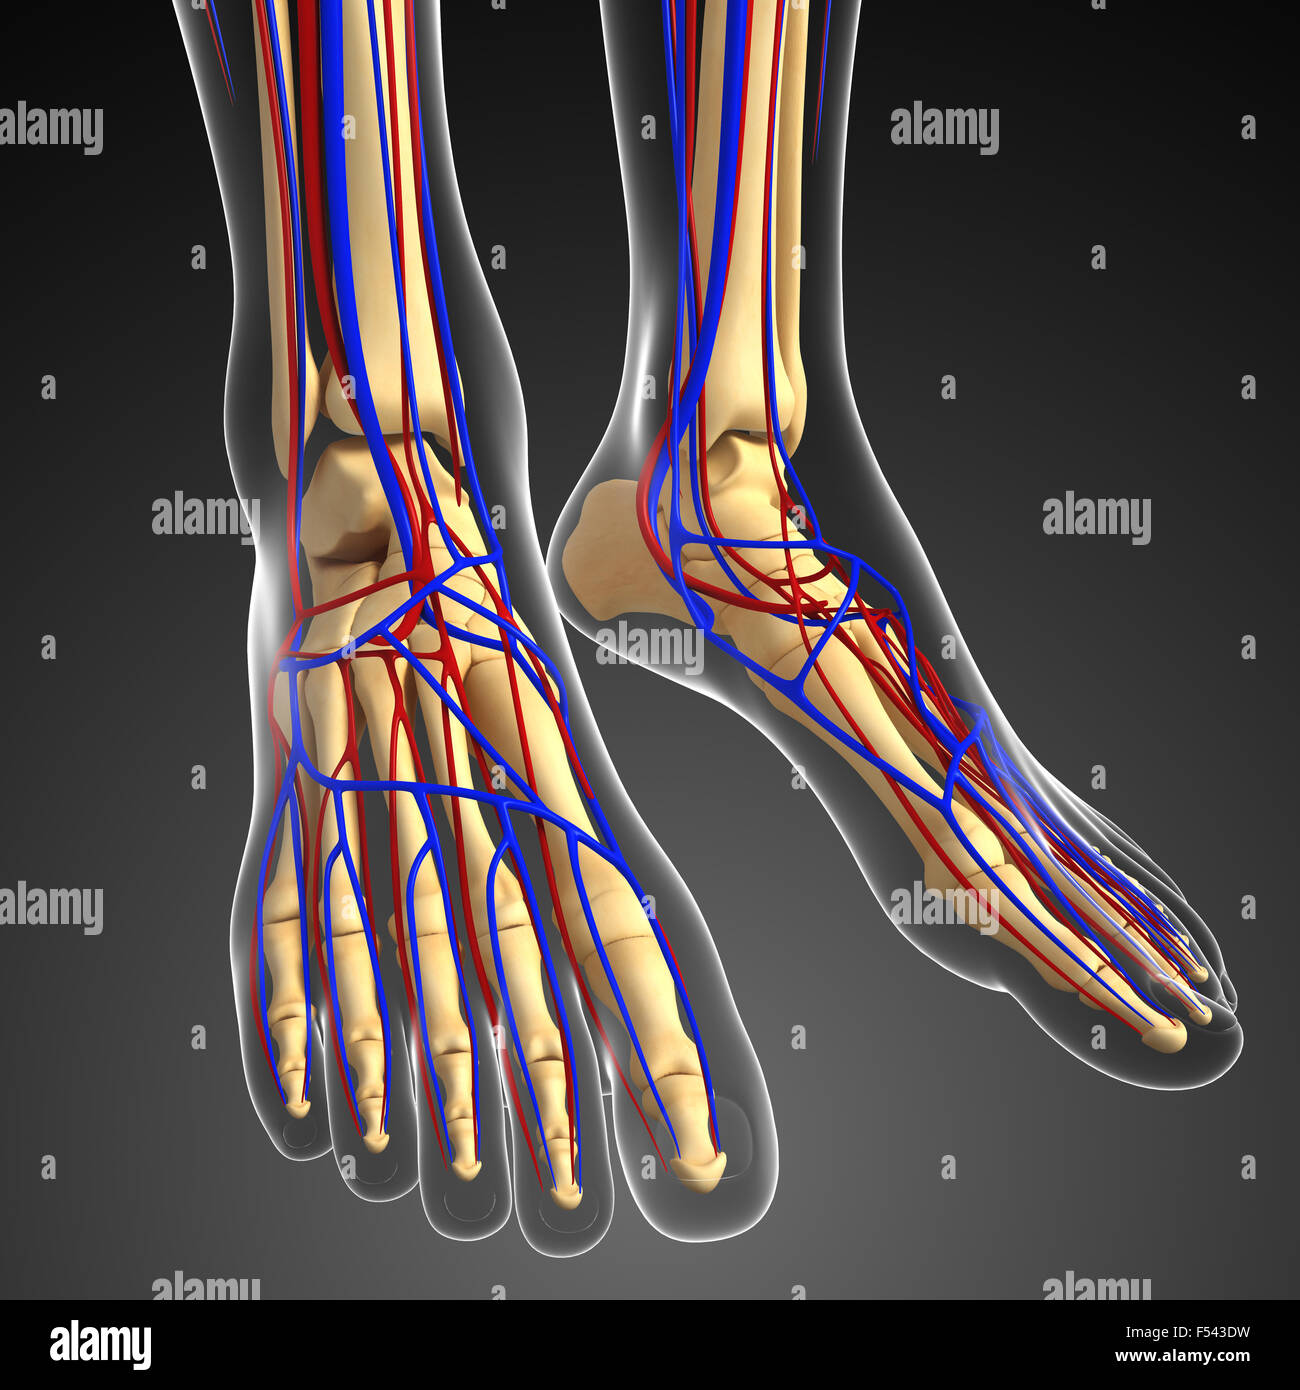 Illustration of human skeletal circulatory system Stock Photo